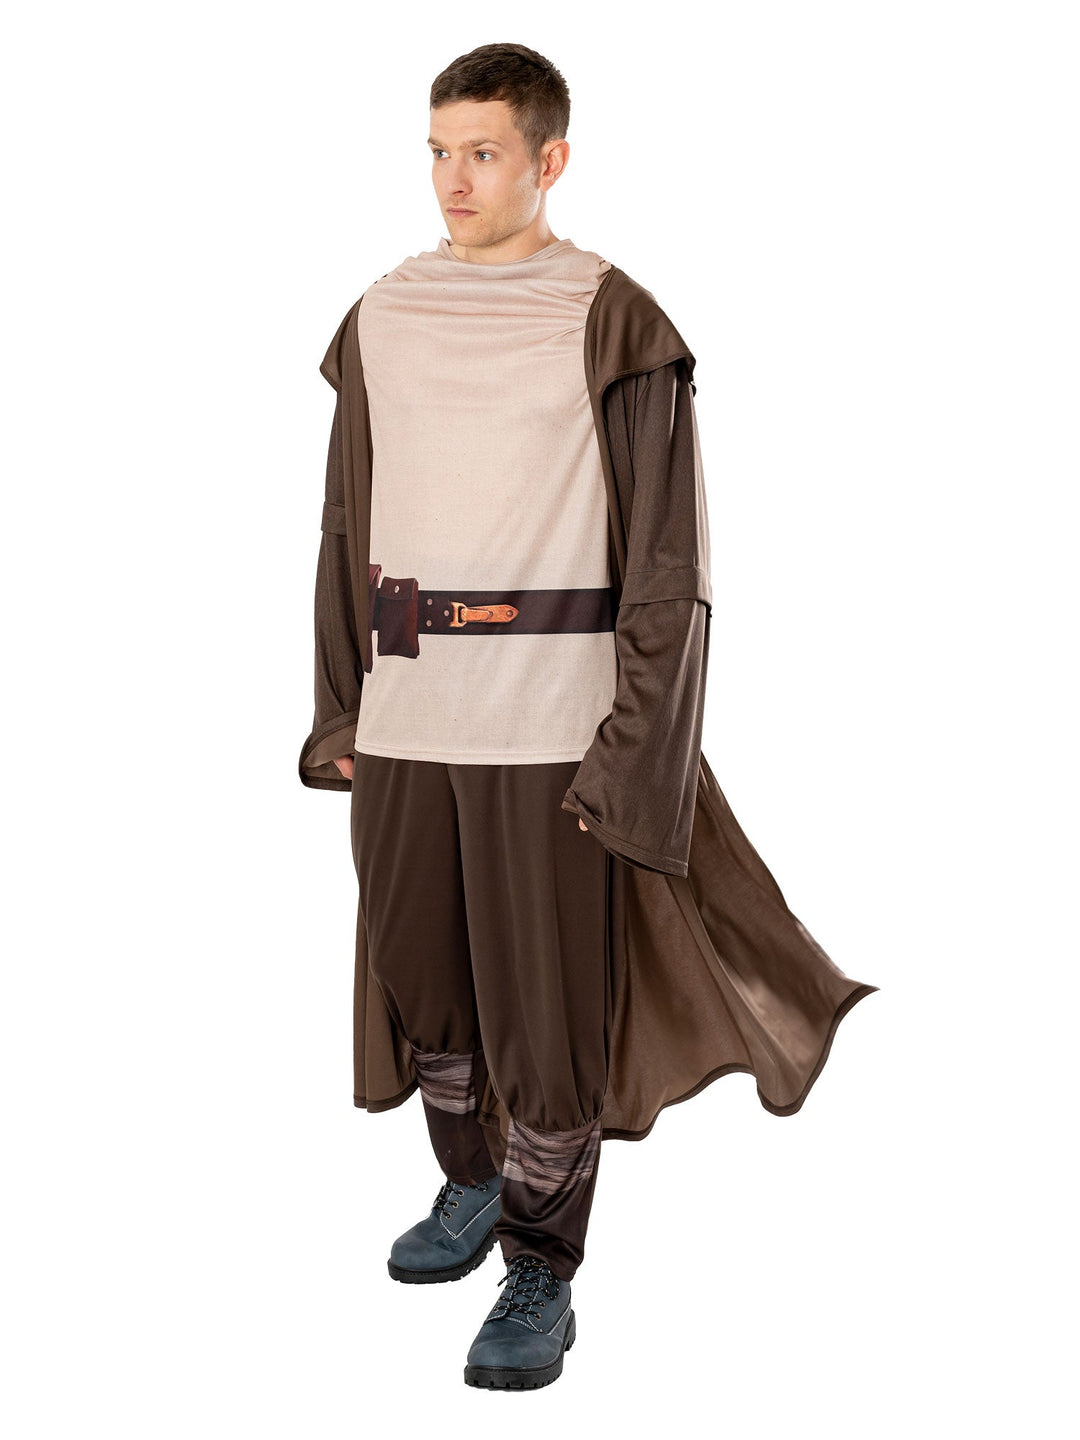 Obi Wan Kenobi Costume Deluxe Adult TV Show_1